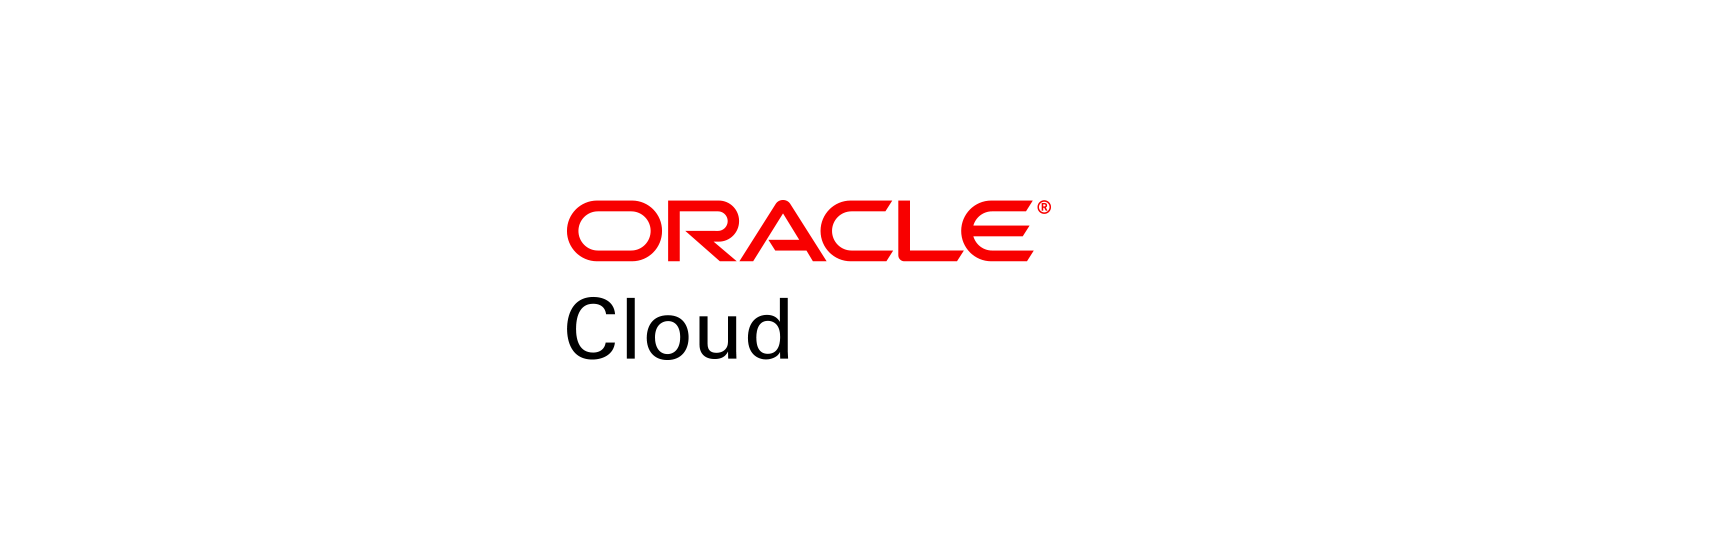 Oracle Logo - Oracle Brand